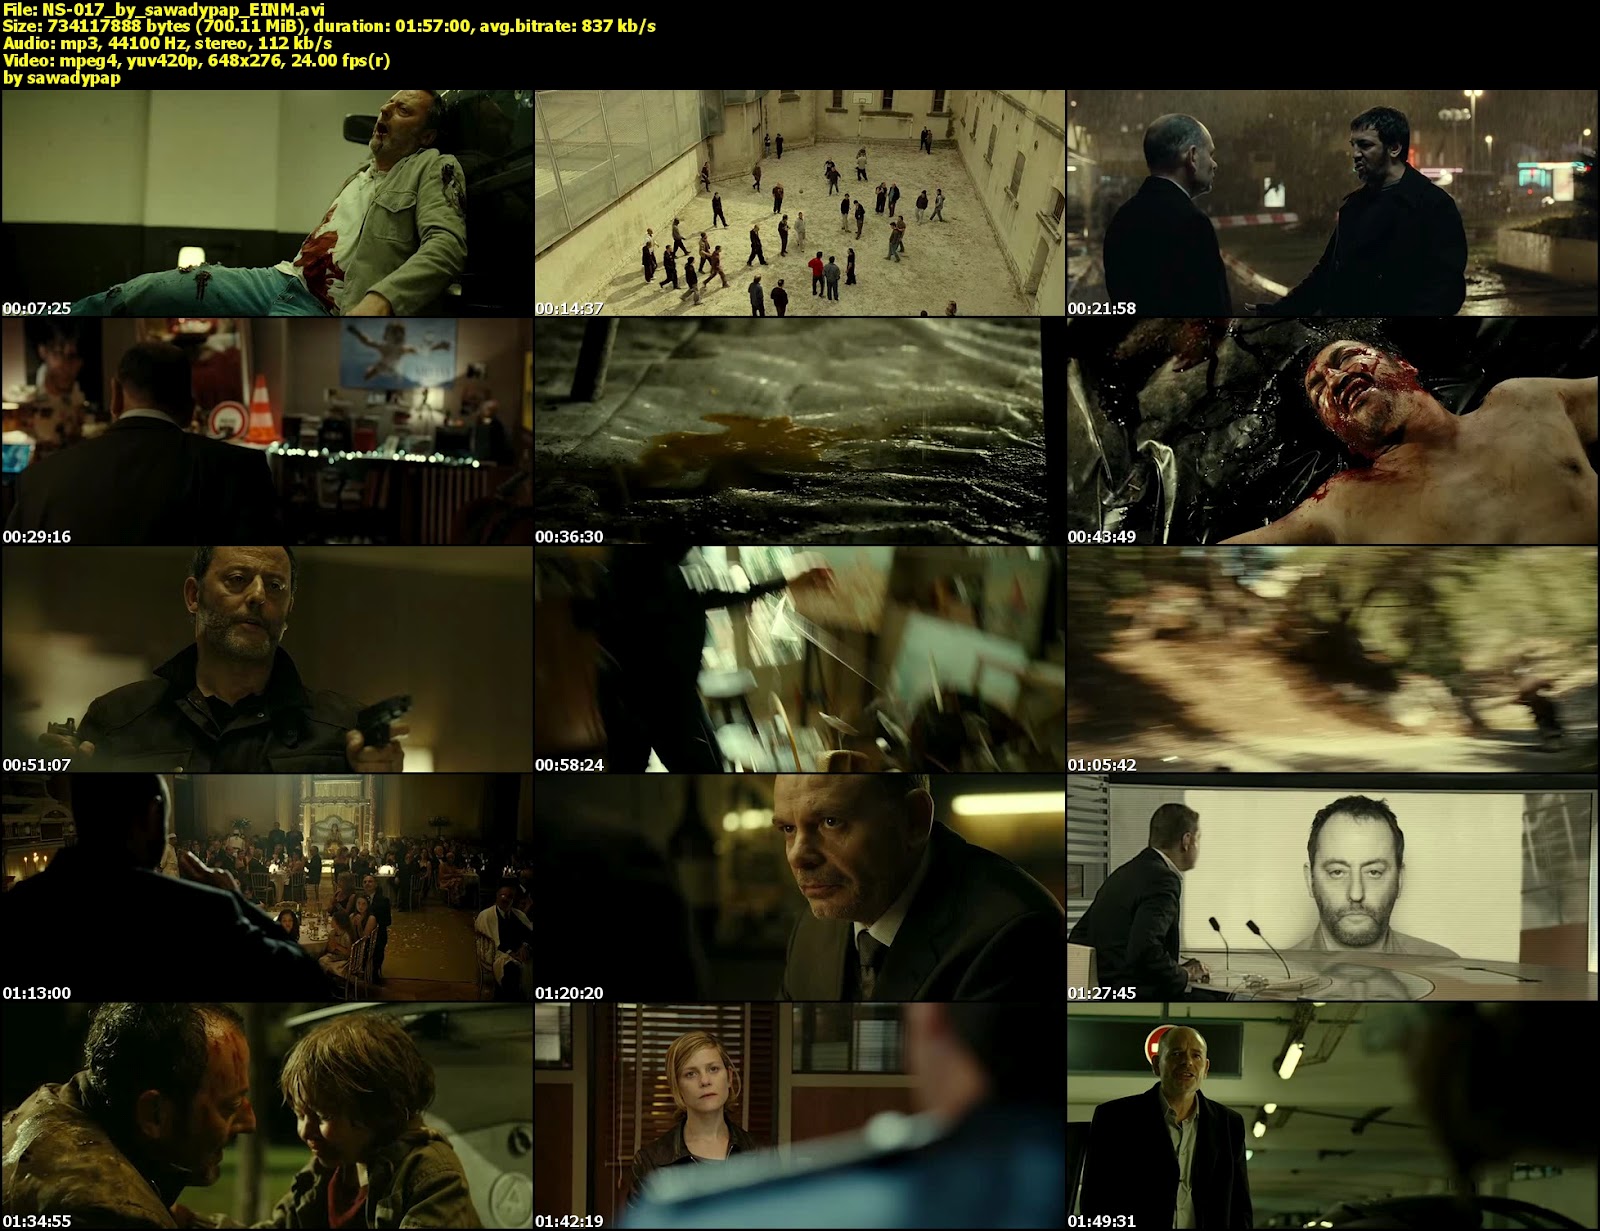 El Inmortal (22 balas) [2010][DVDrip][Latino]